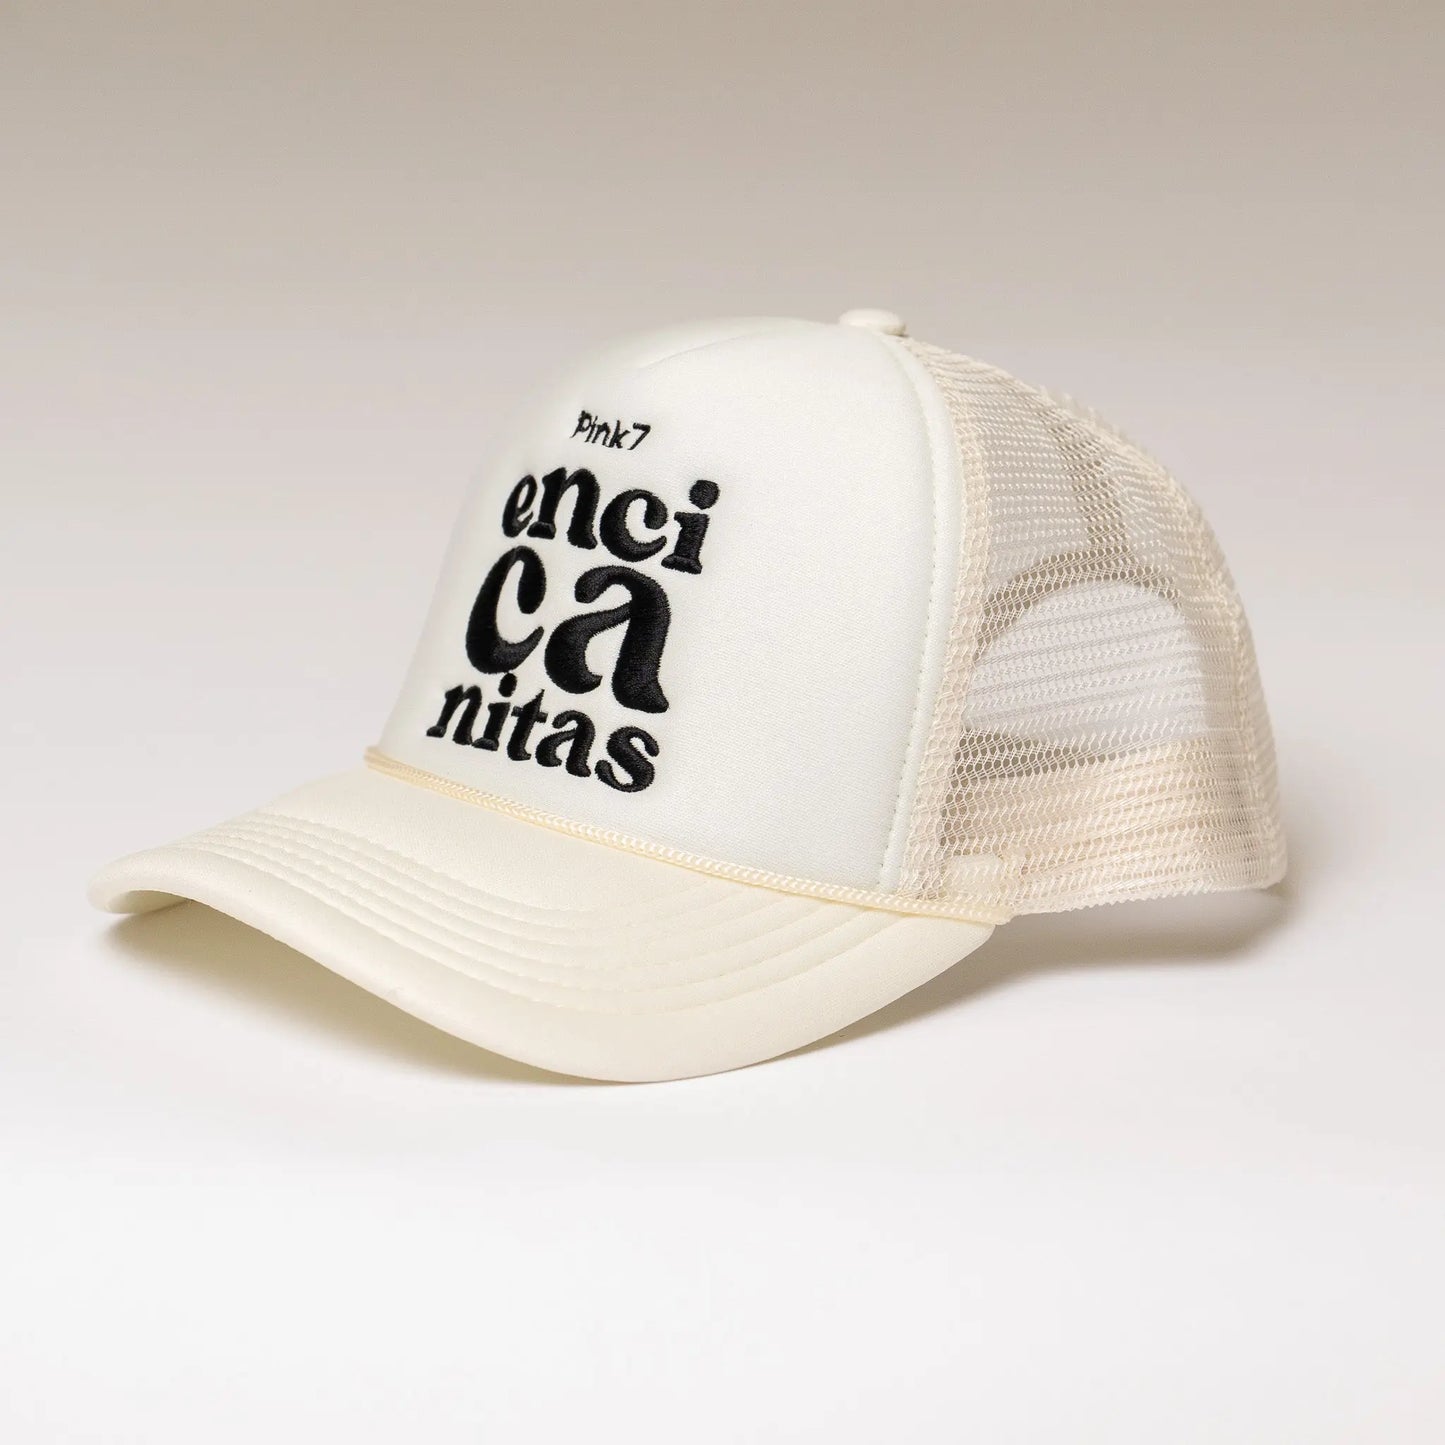 Vintage Encinitas Trucker Hat - White - Pink7, Inc.